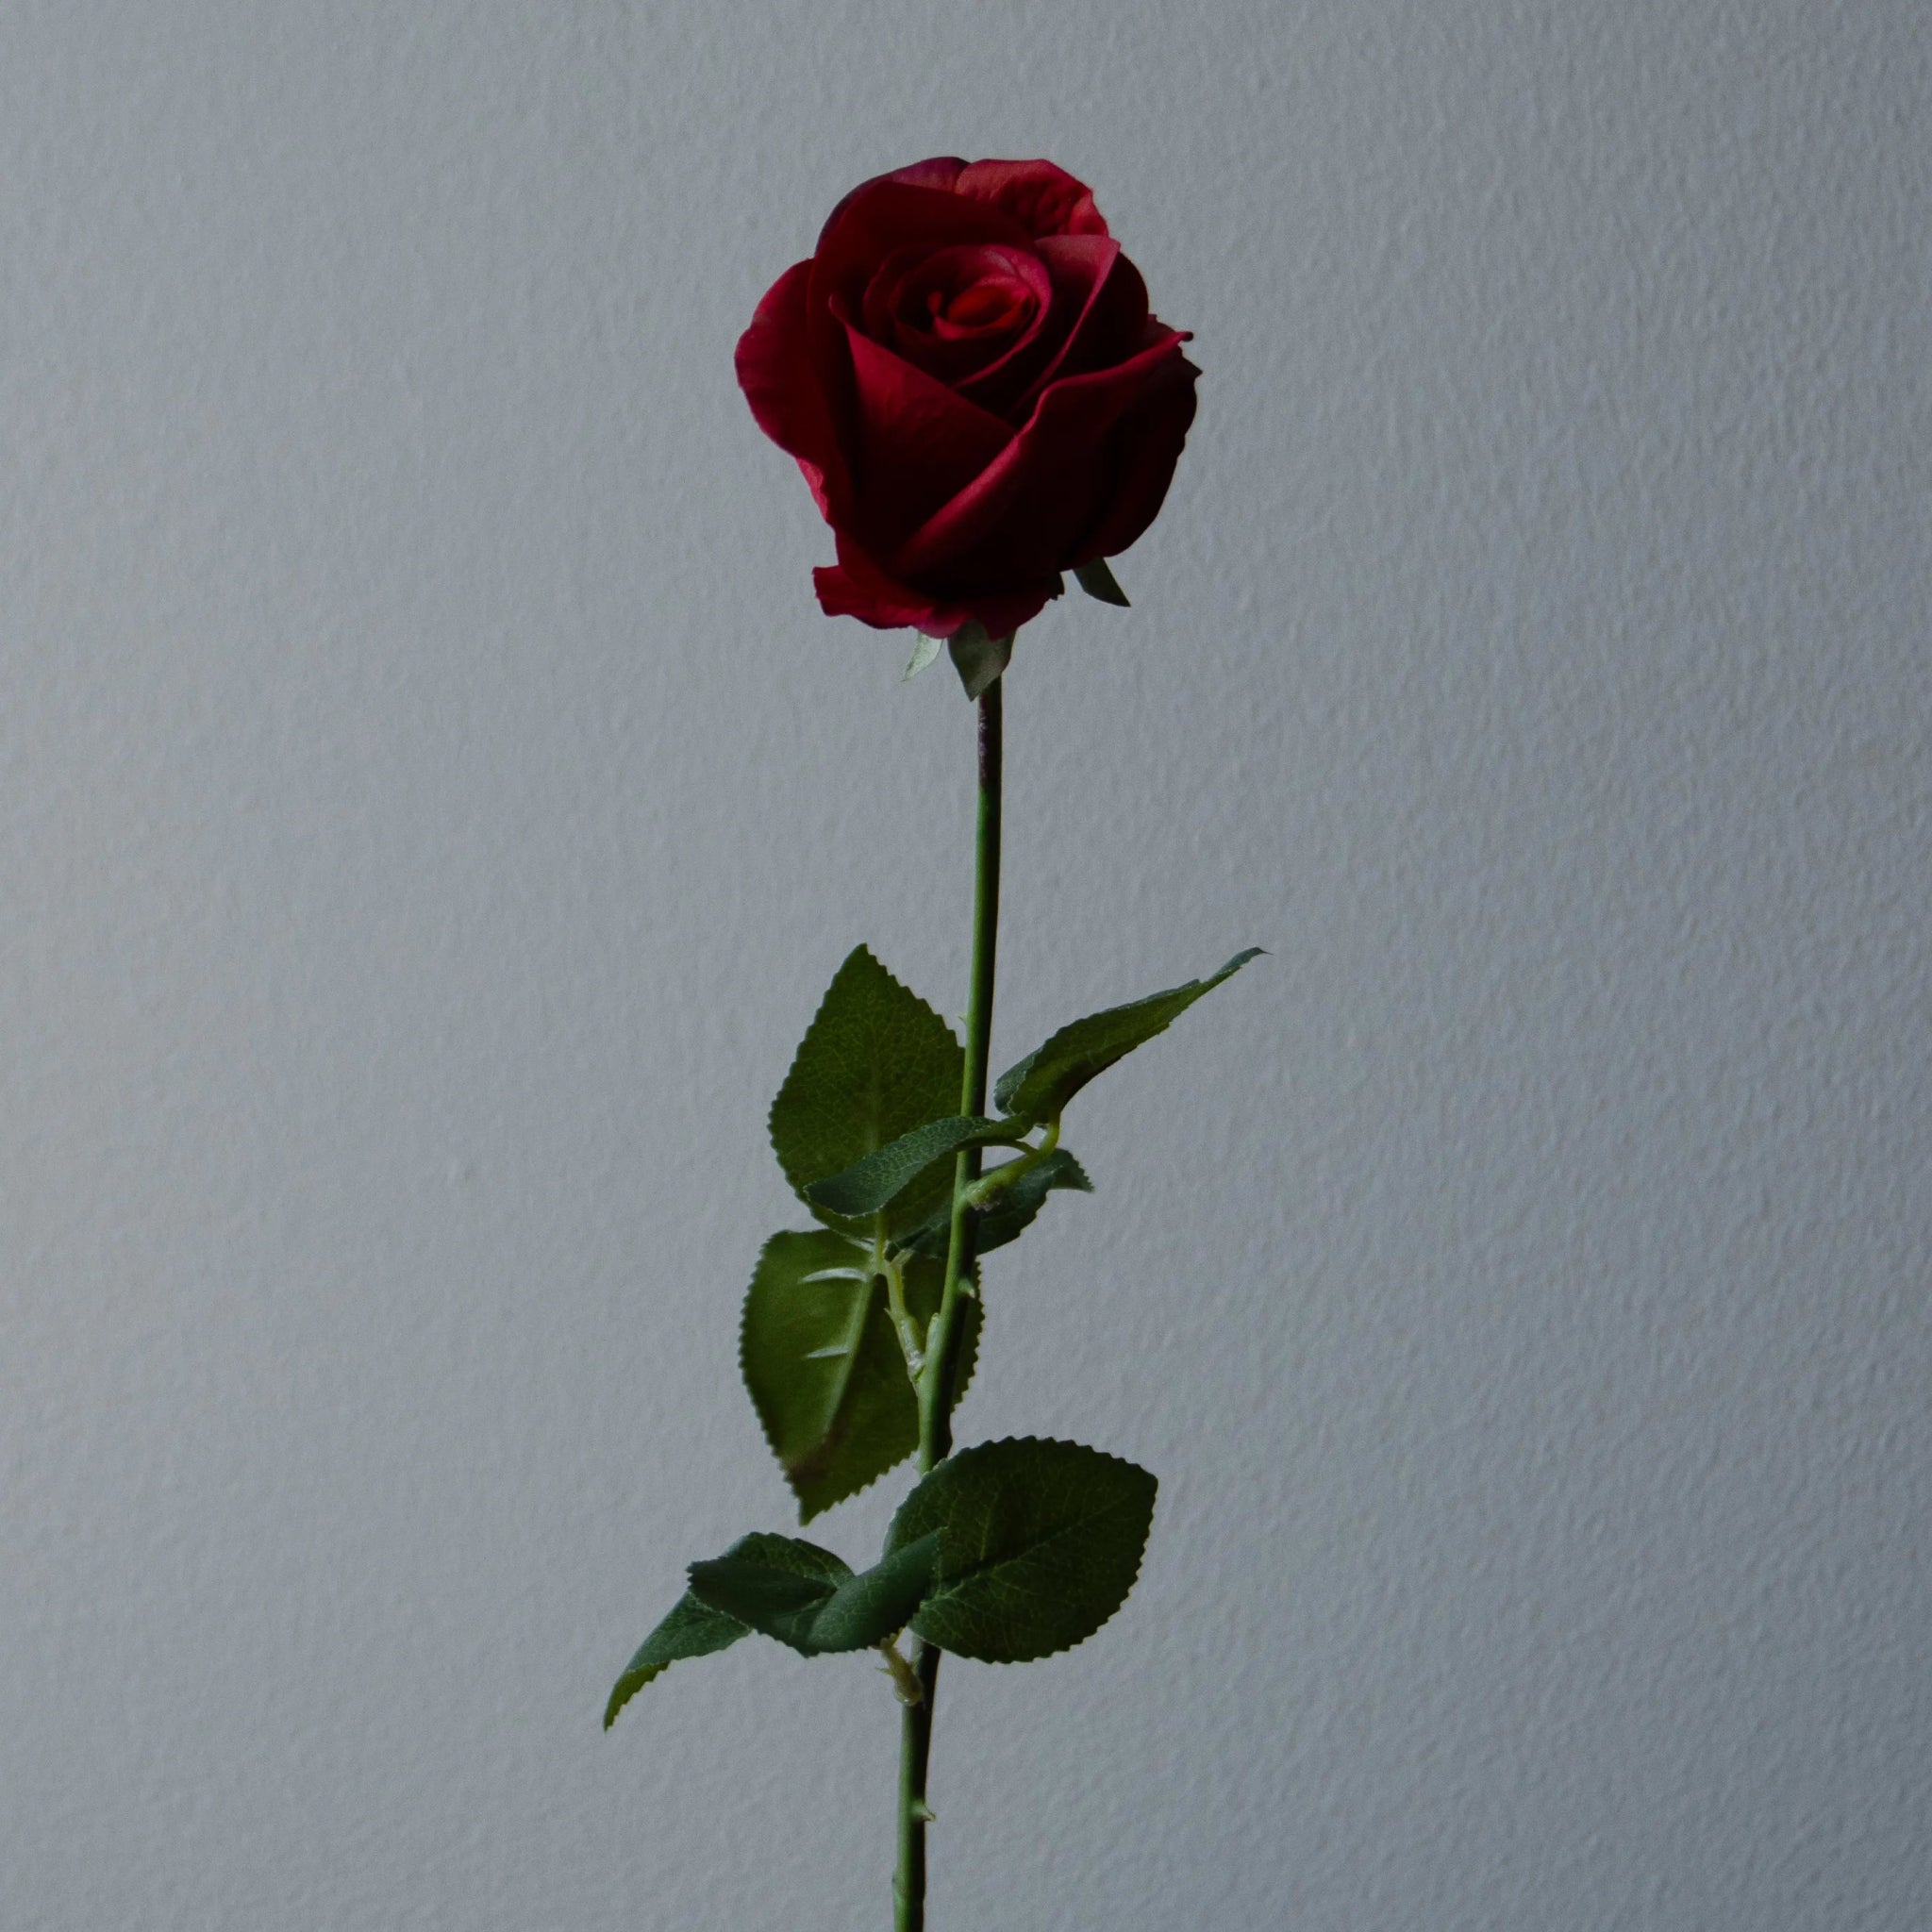 Artificial Premium Longstem Rose from Botané